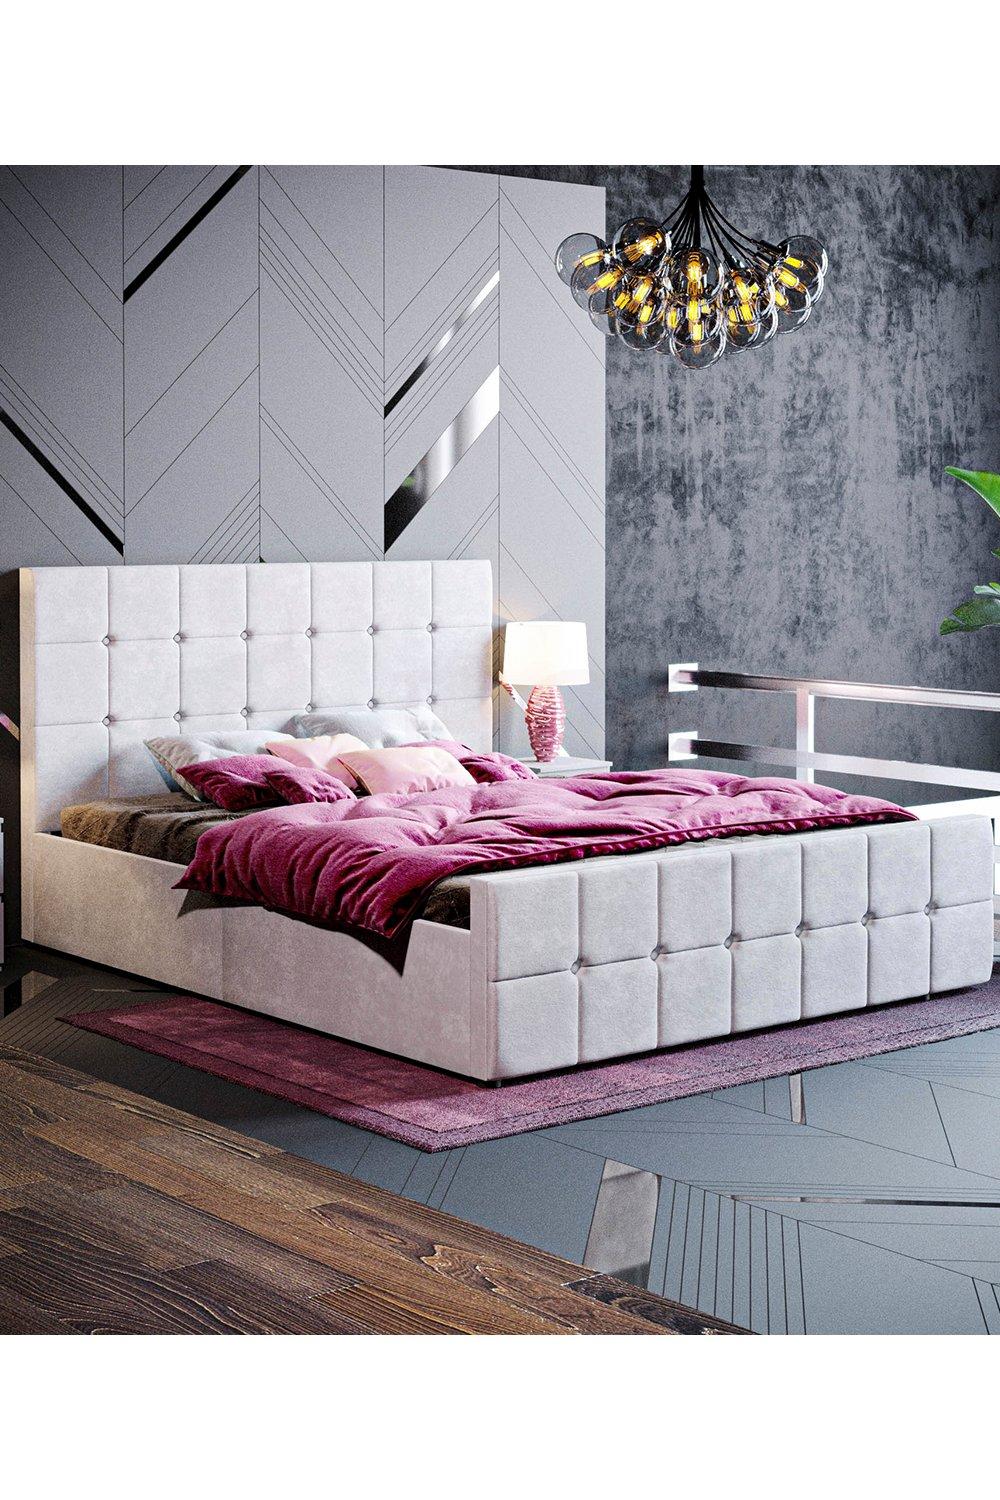 Vida Designs Valentina King Size Ottoman Bed Frame Velvet Fabric 1040 x 1600 x 2170 mm